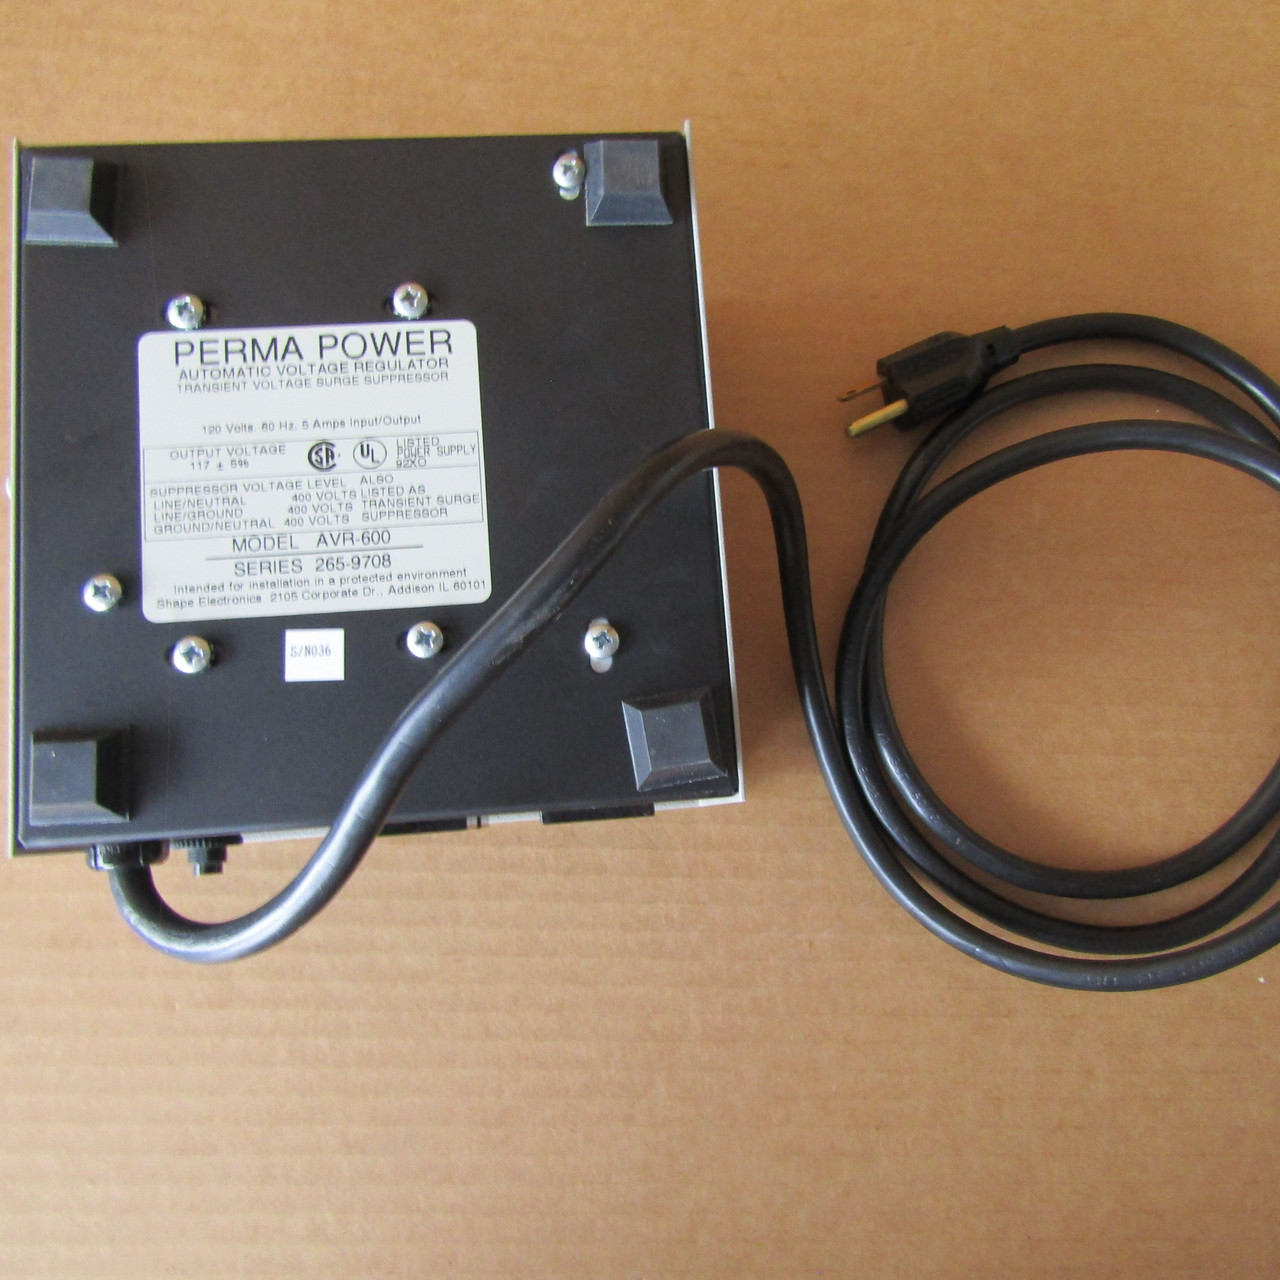 Perma Power AVR-600 Automatic Voltage Regulator 120V 60Hz 5 Amps - New